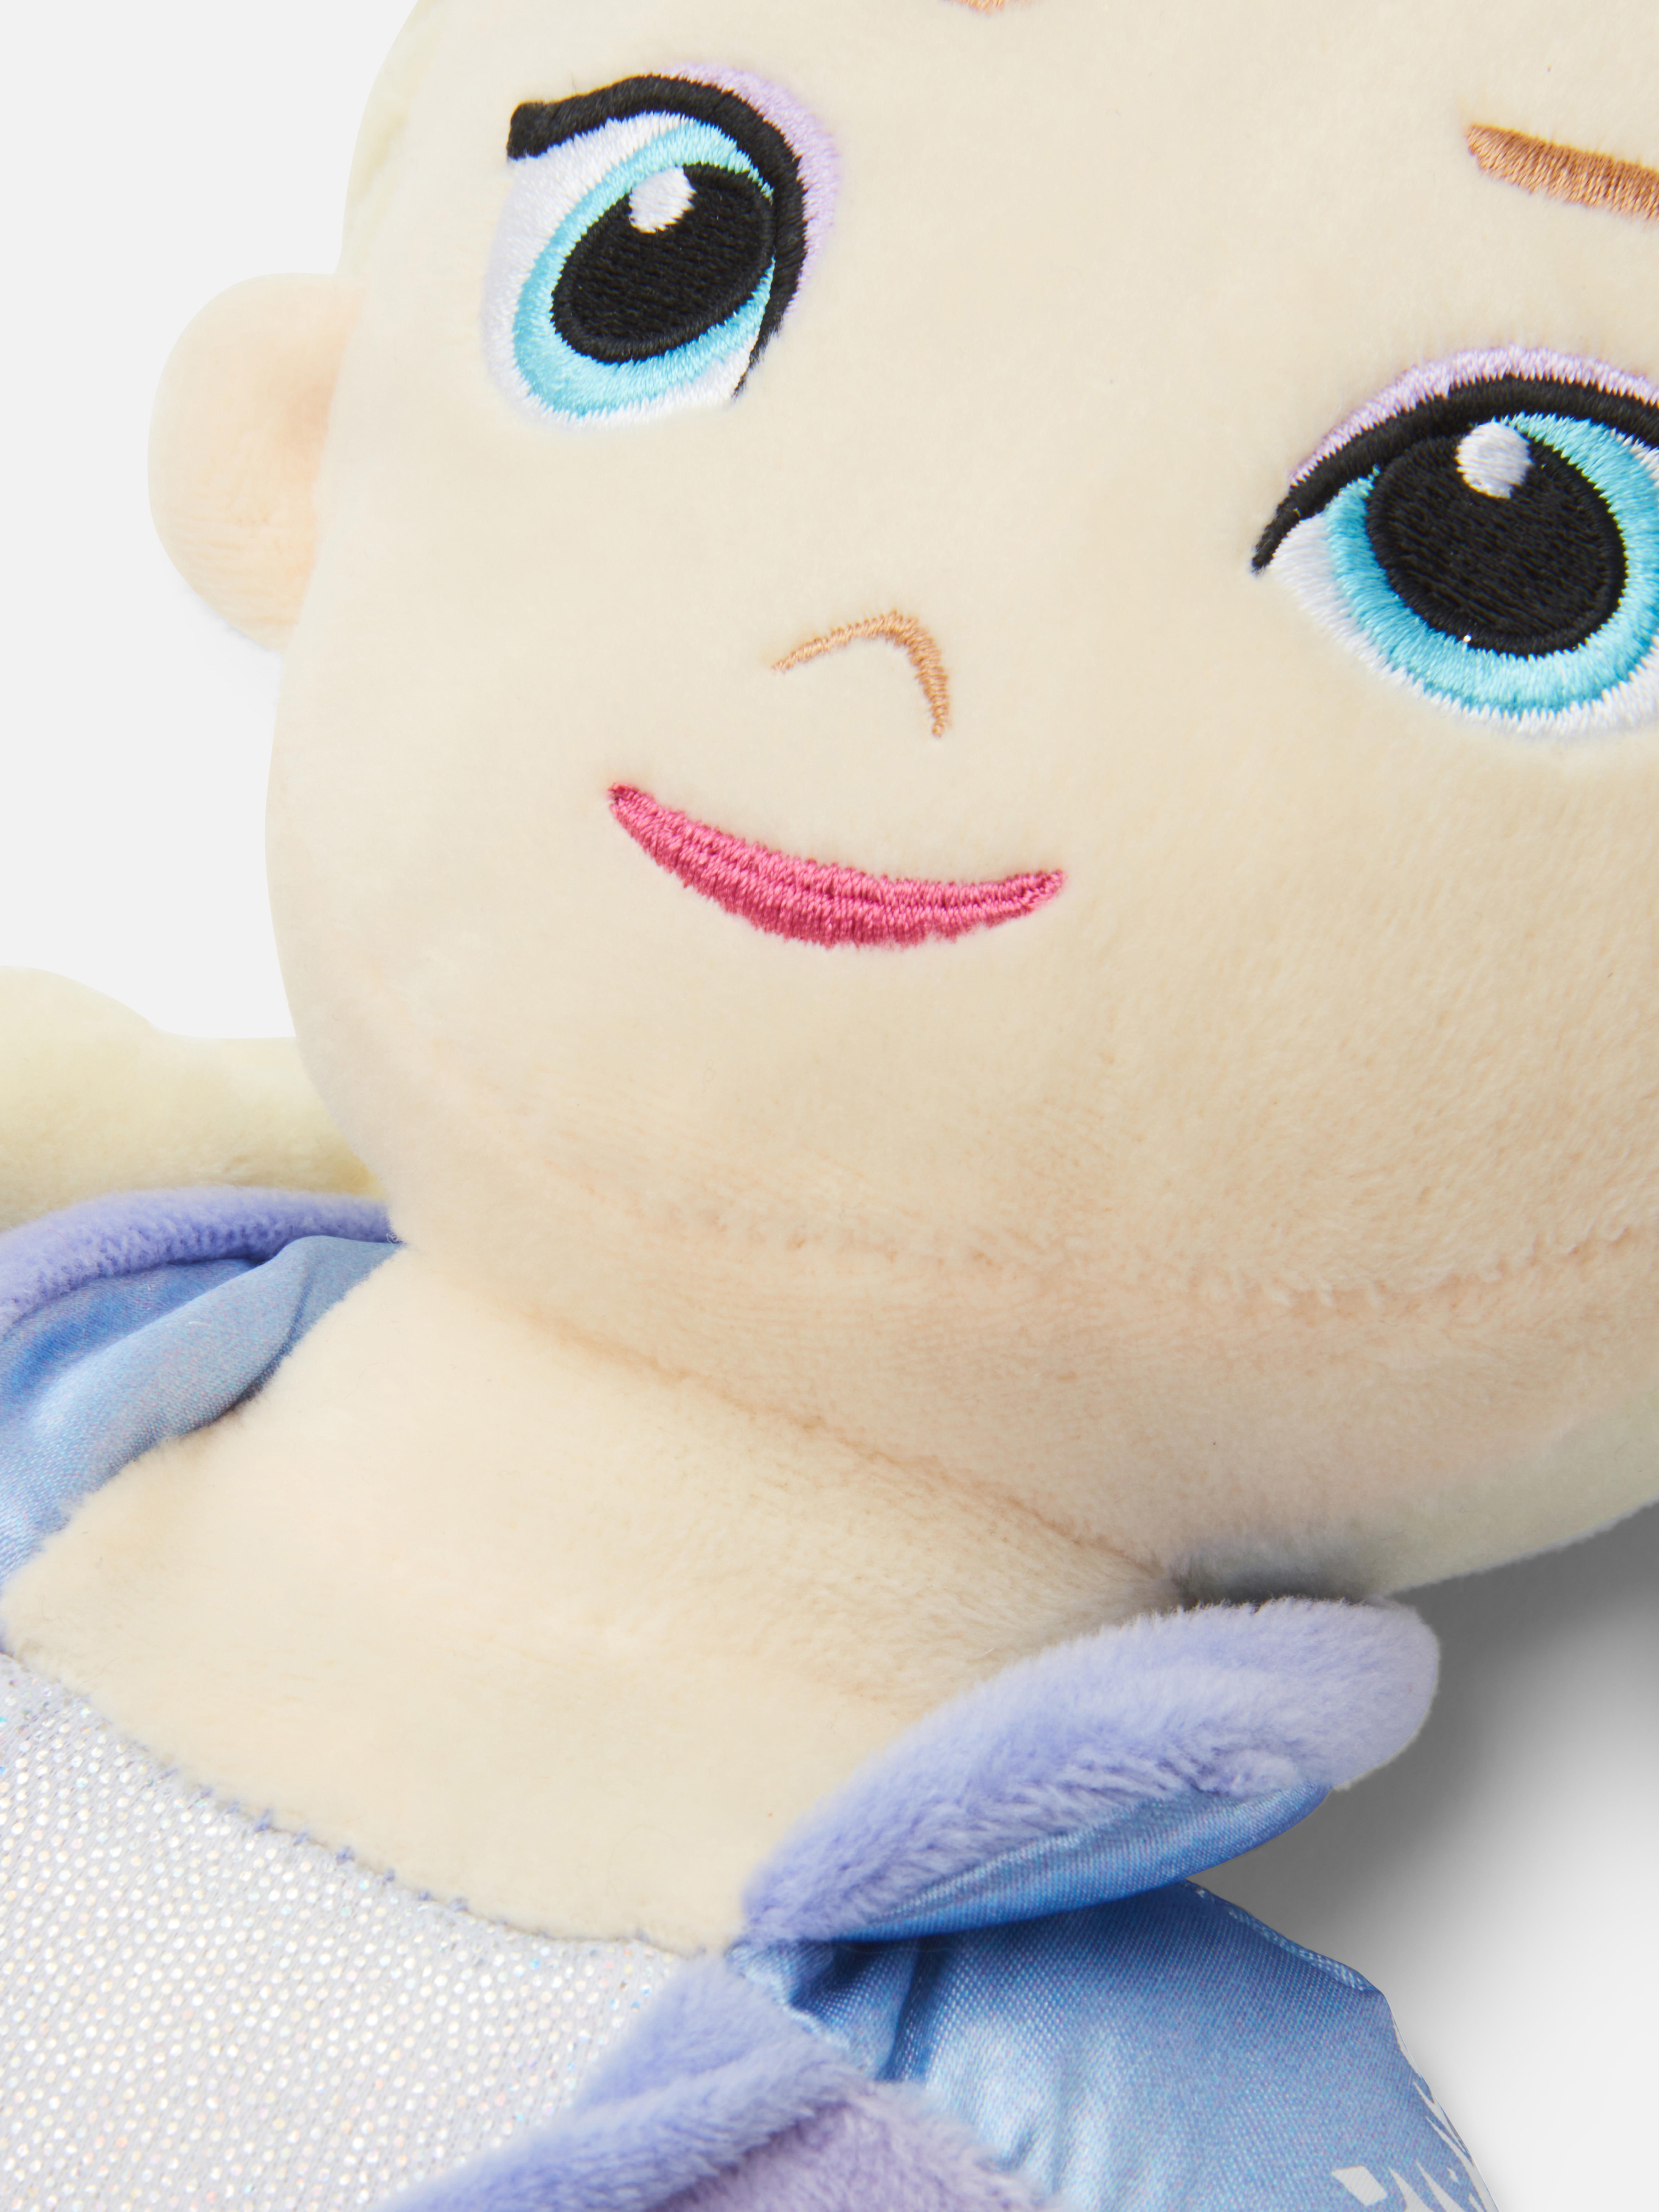 Disney’s Frozen Elsa Plush Toy